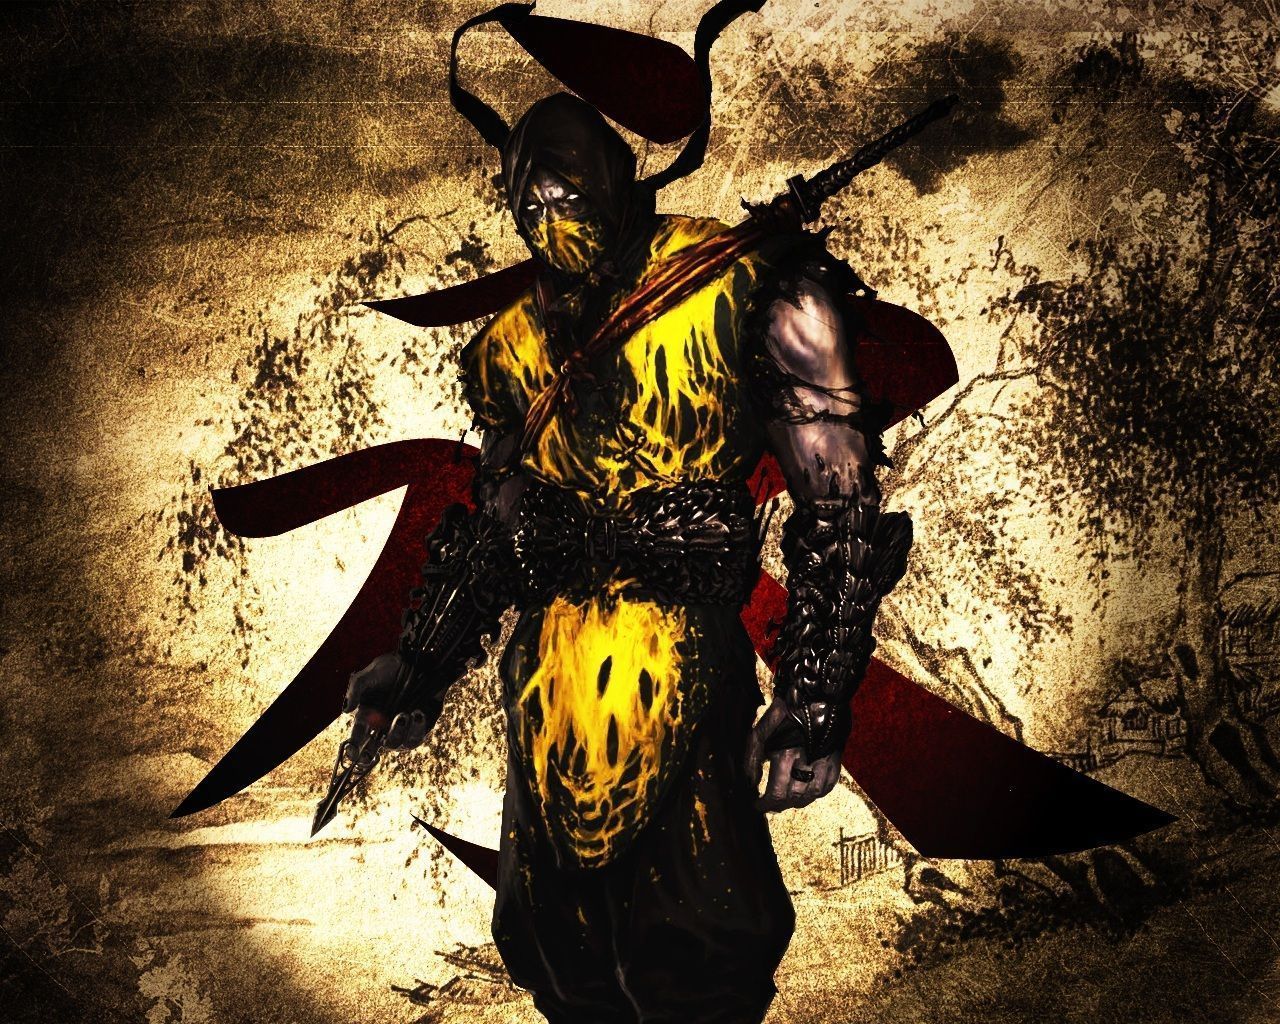 Top Mortal Kombat Scorpion Hd Images for Pinterest